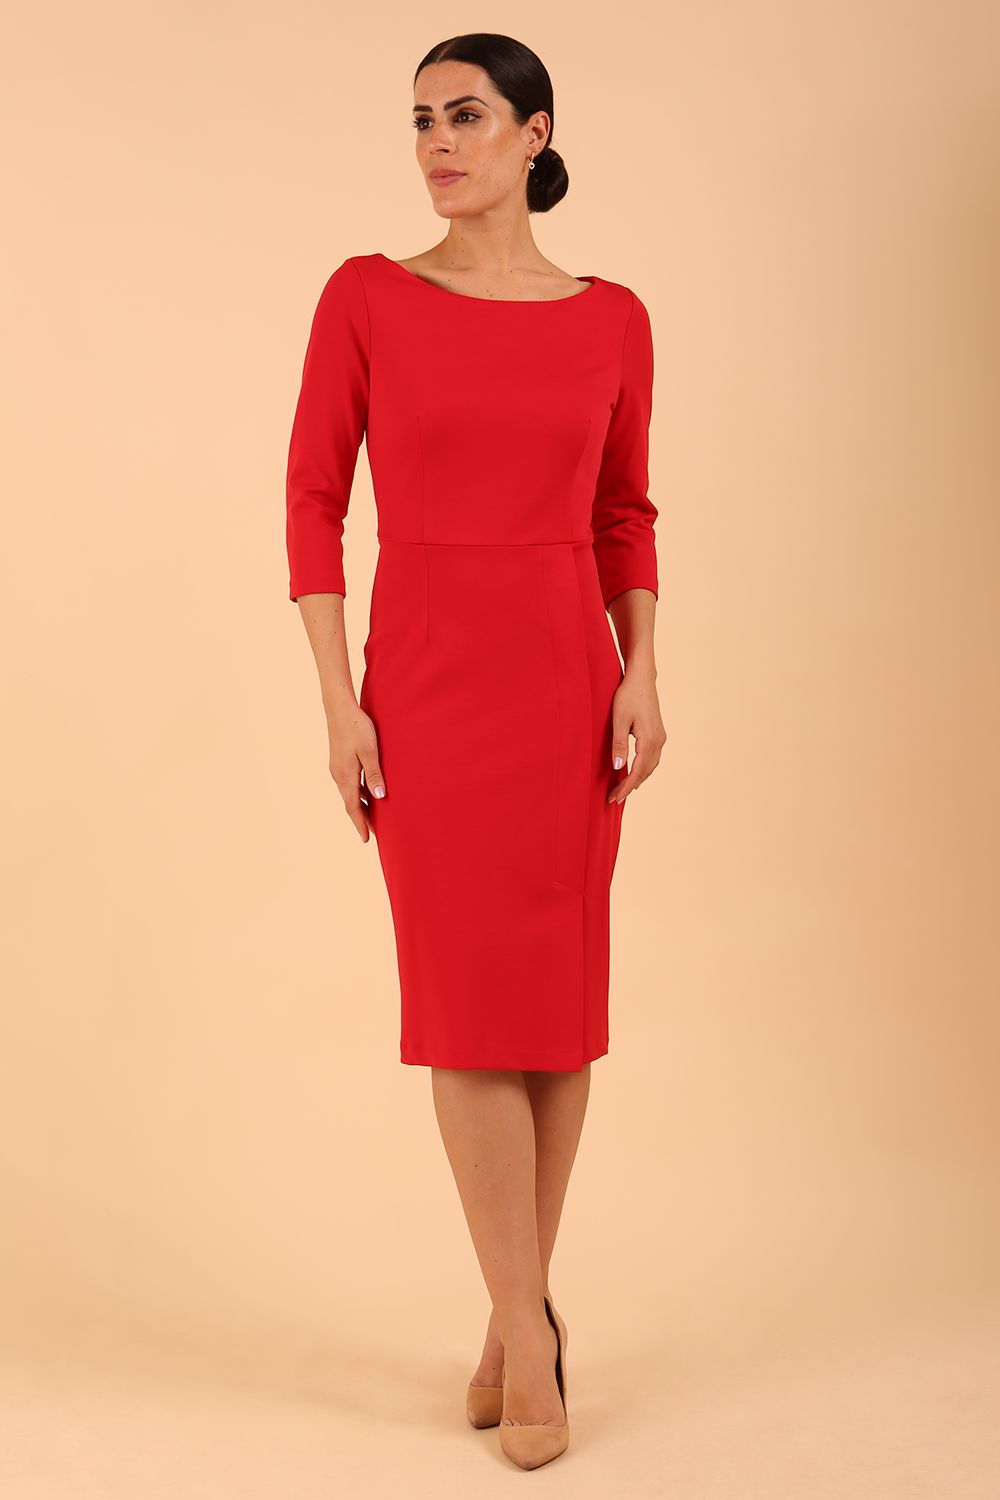 Model wearing diva catwalk Kinga 3/4 Sleeve pencil skirt dress in Electric Red colour